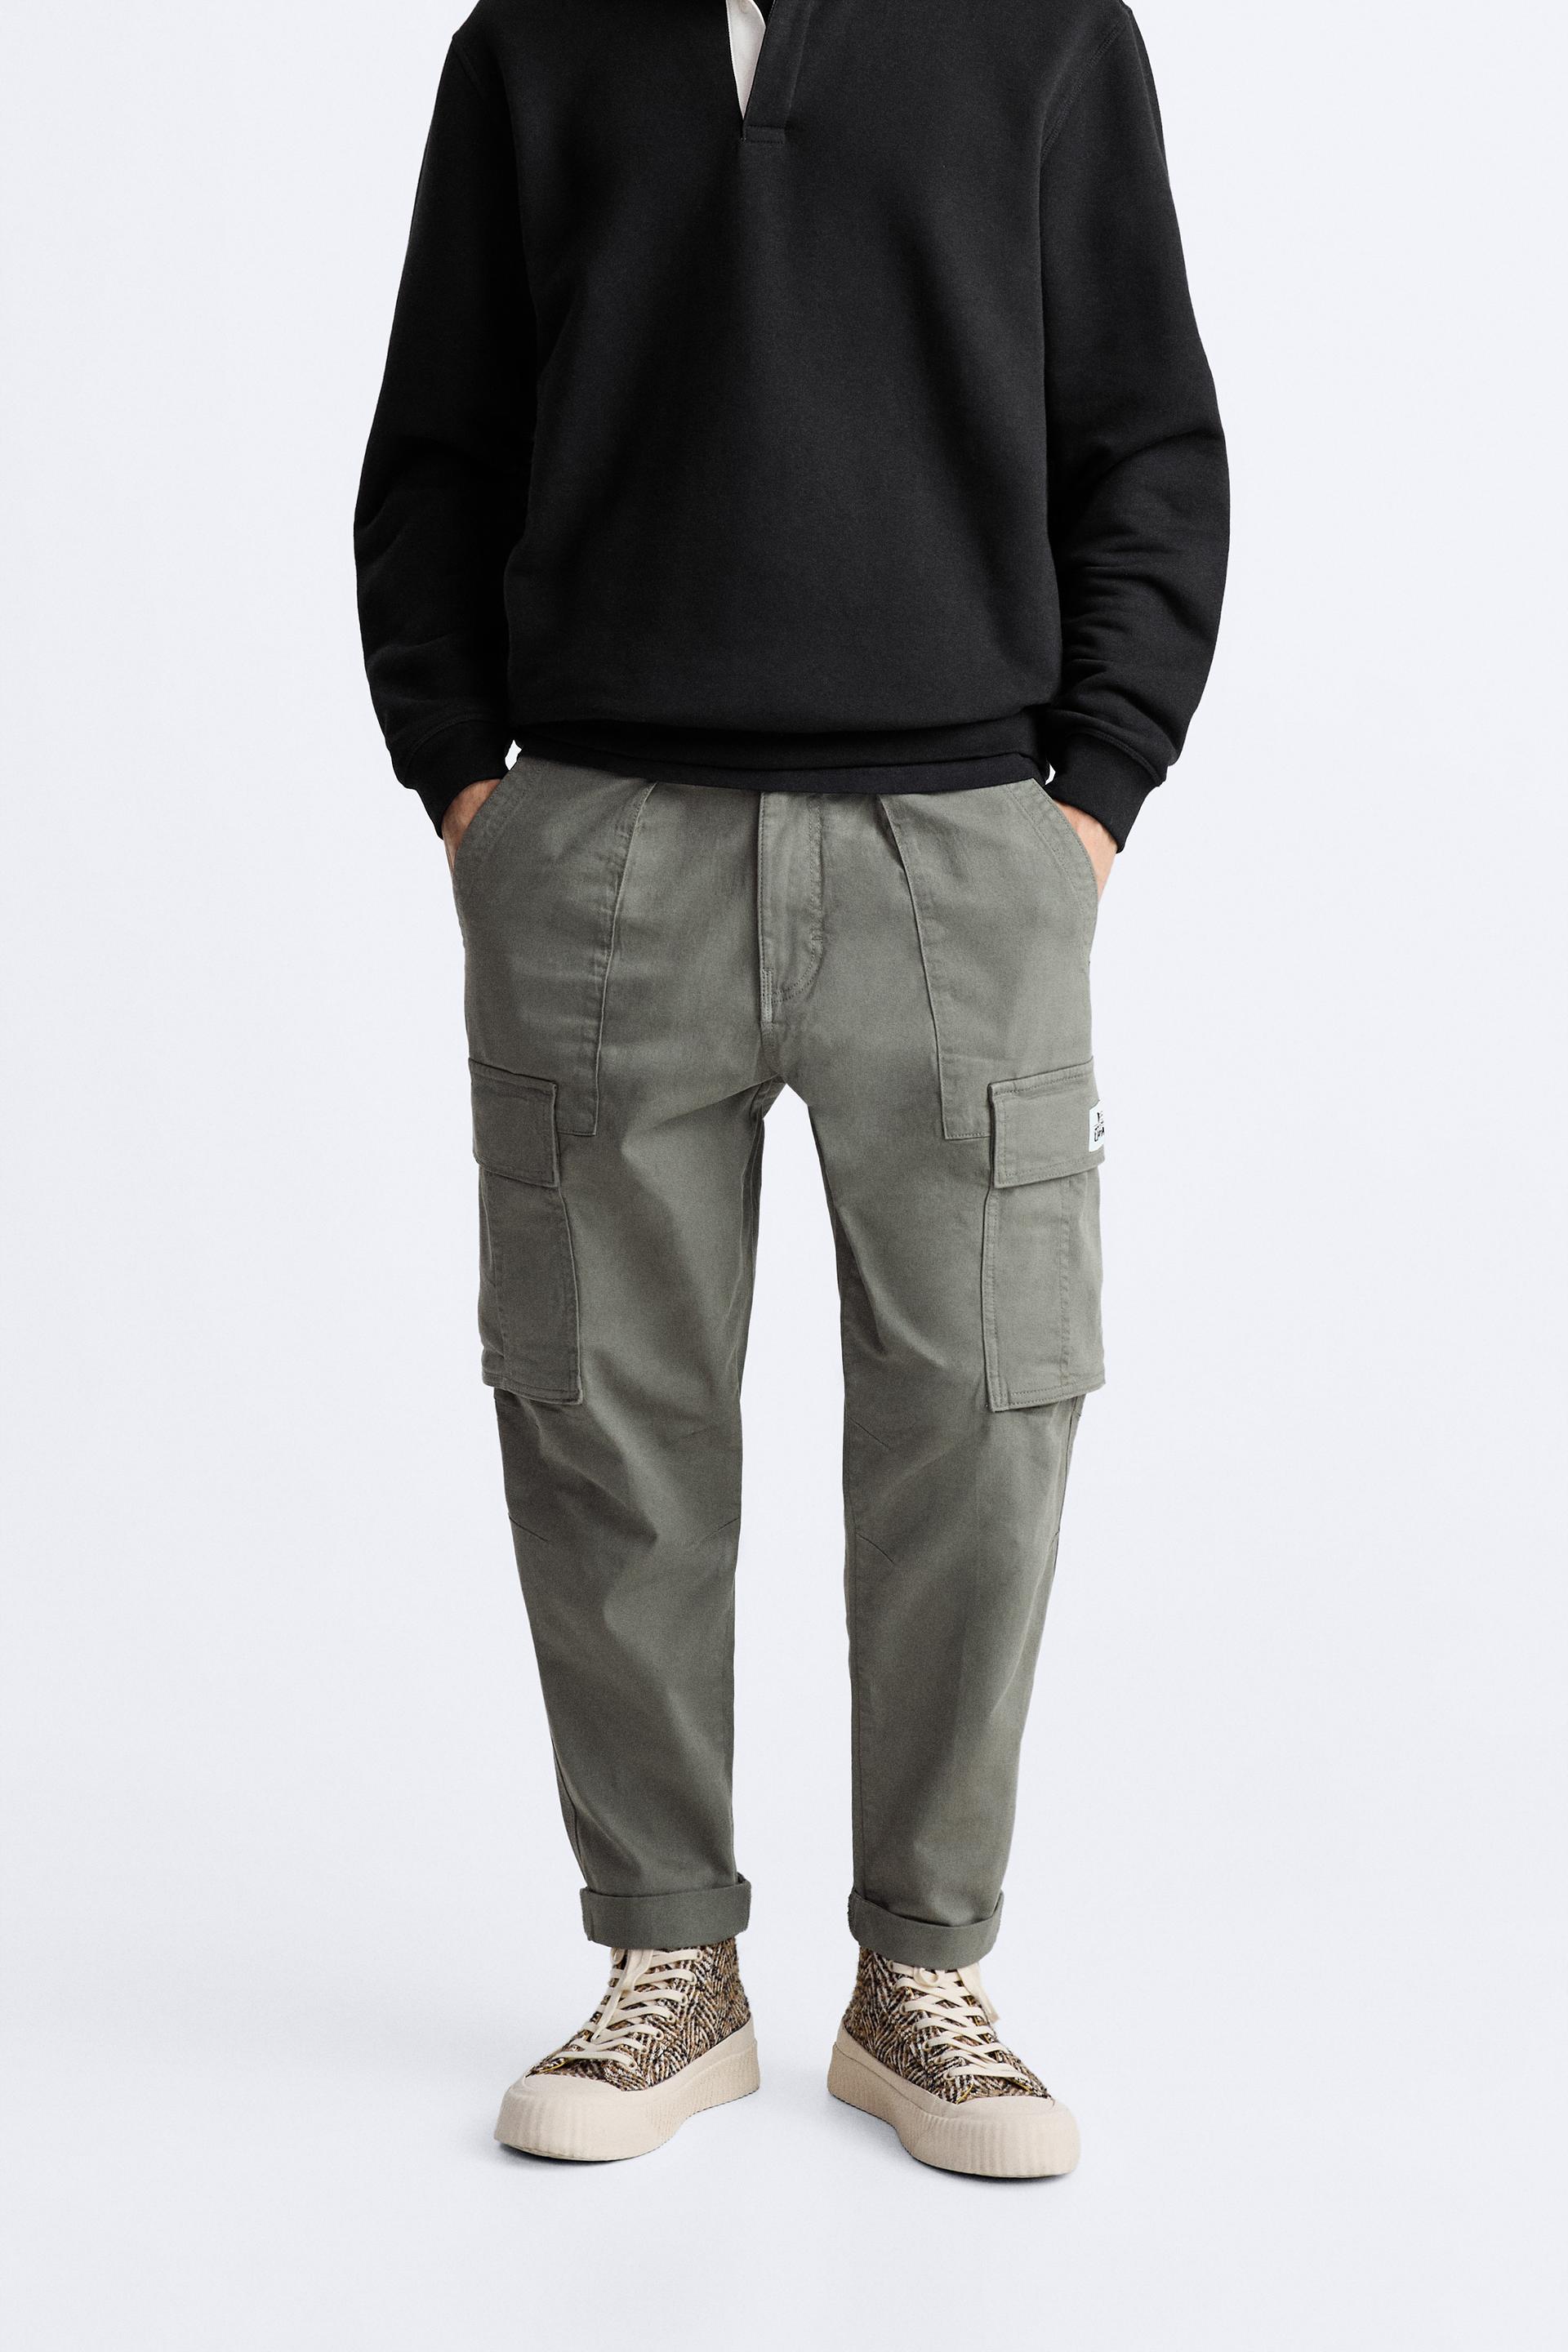 soft flowy zara cargo/khaki type pants, zipper and - Depop